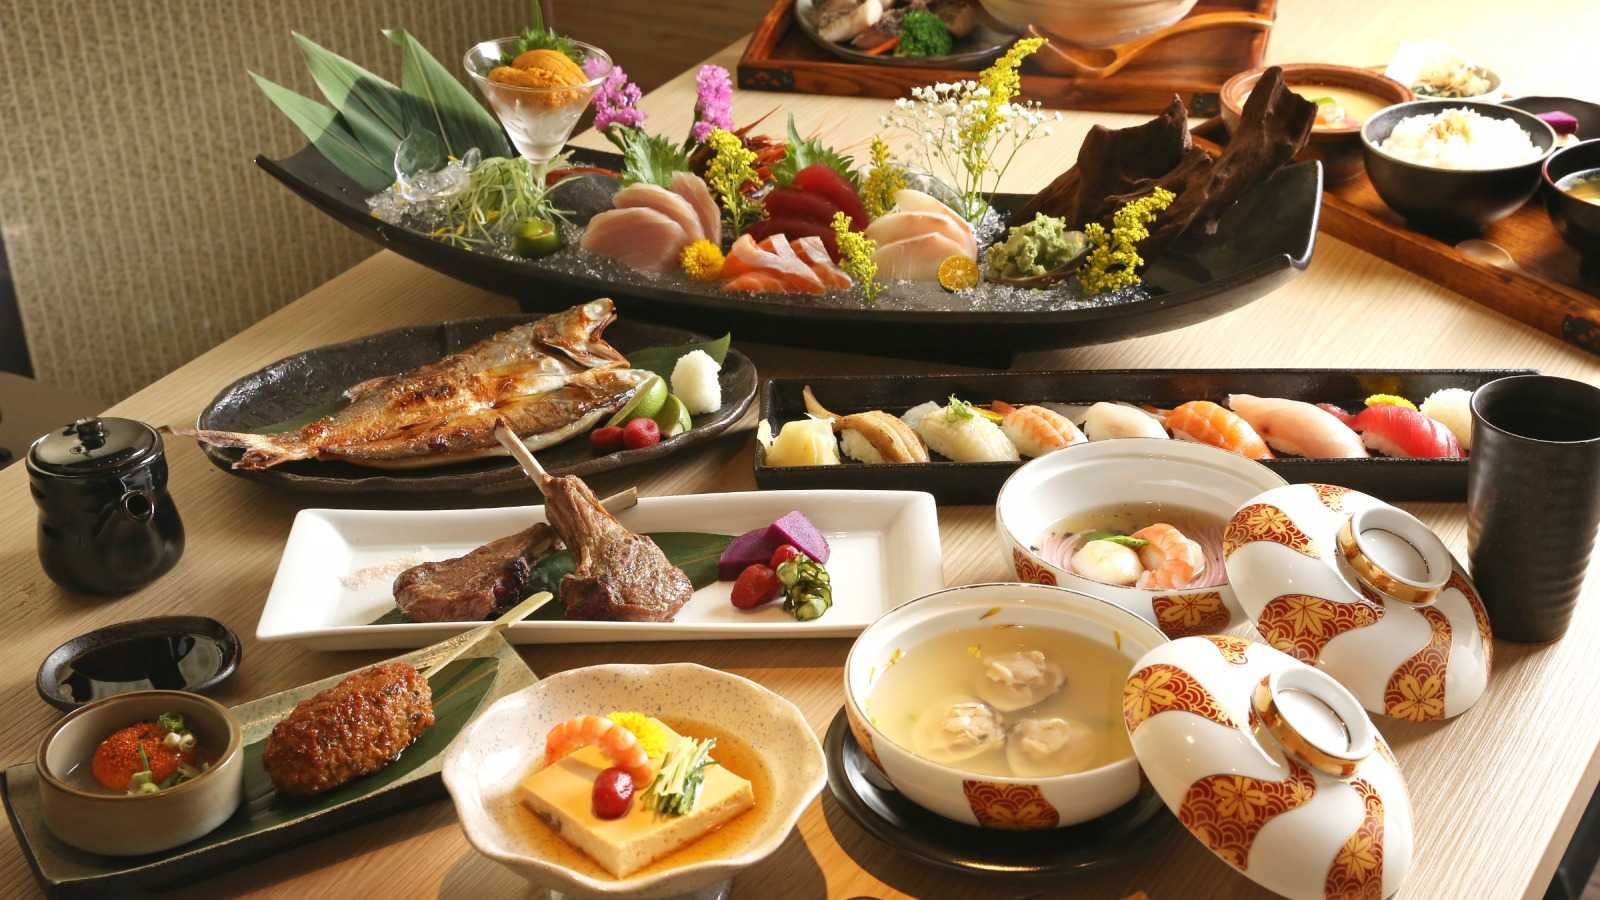 Konnichiwa club - популярные японские блюда